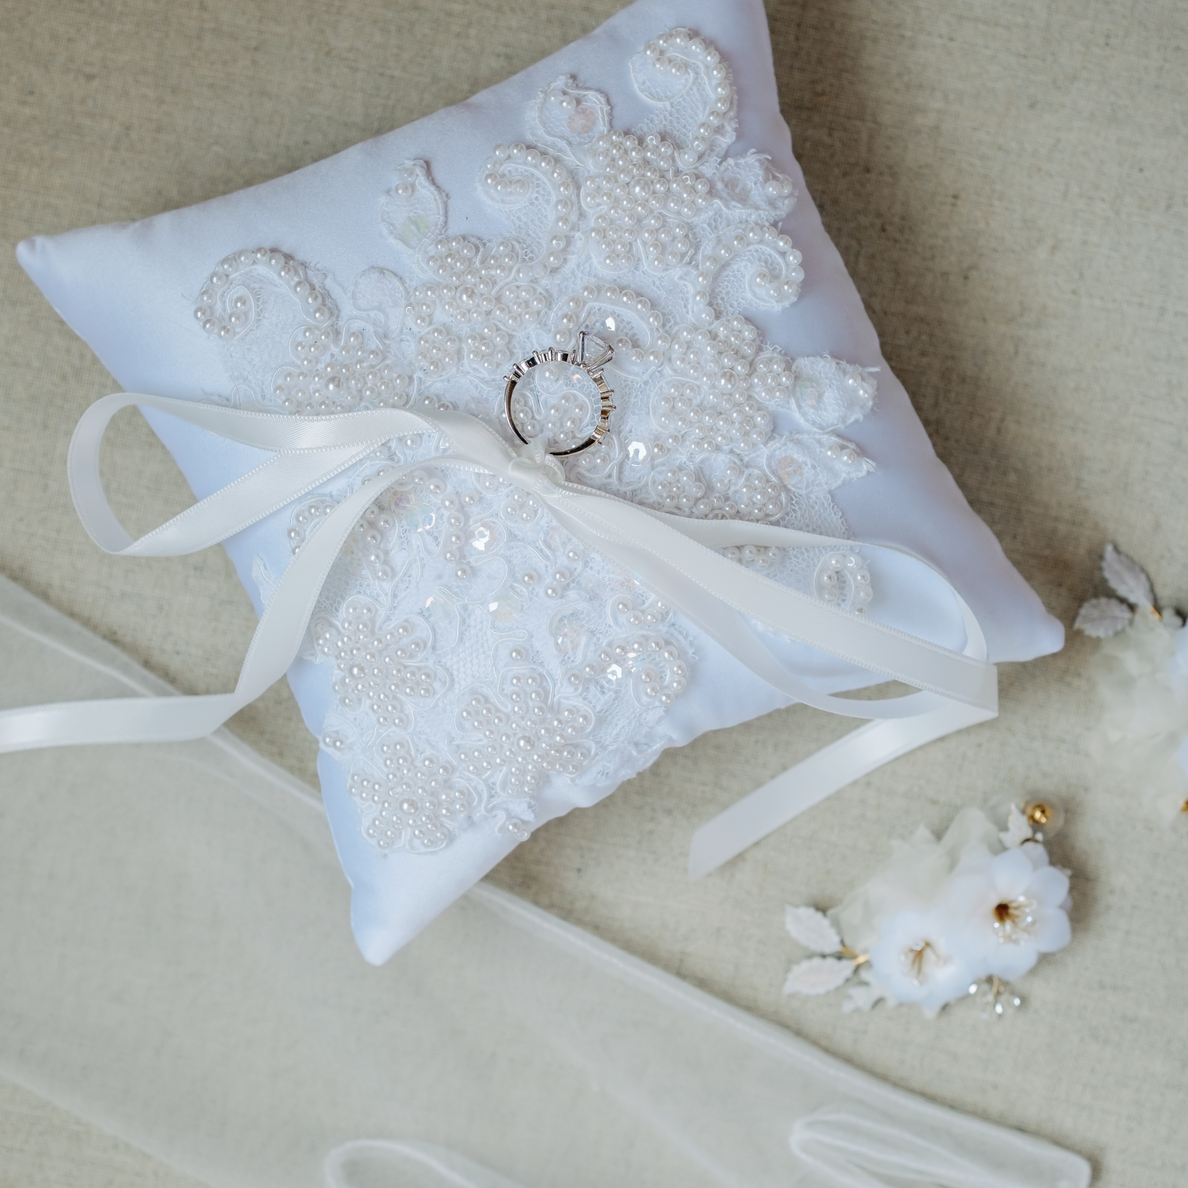 Bridal dresses hang on ribbonsfashion accessories Vector Image